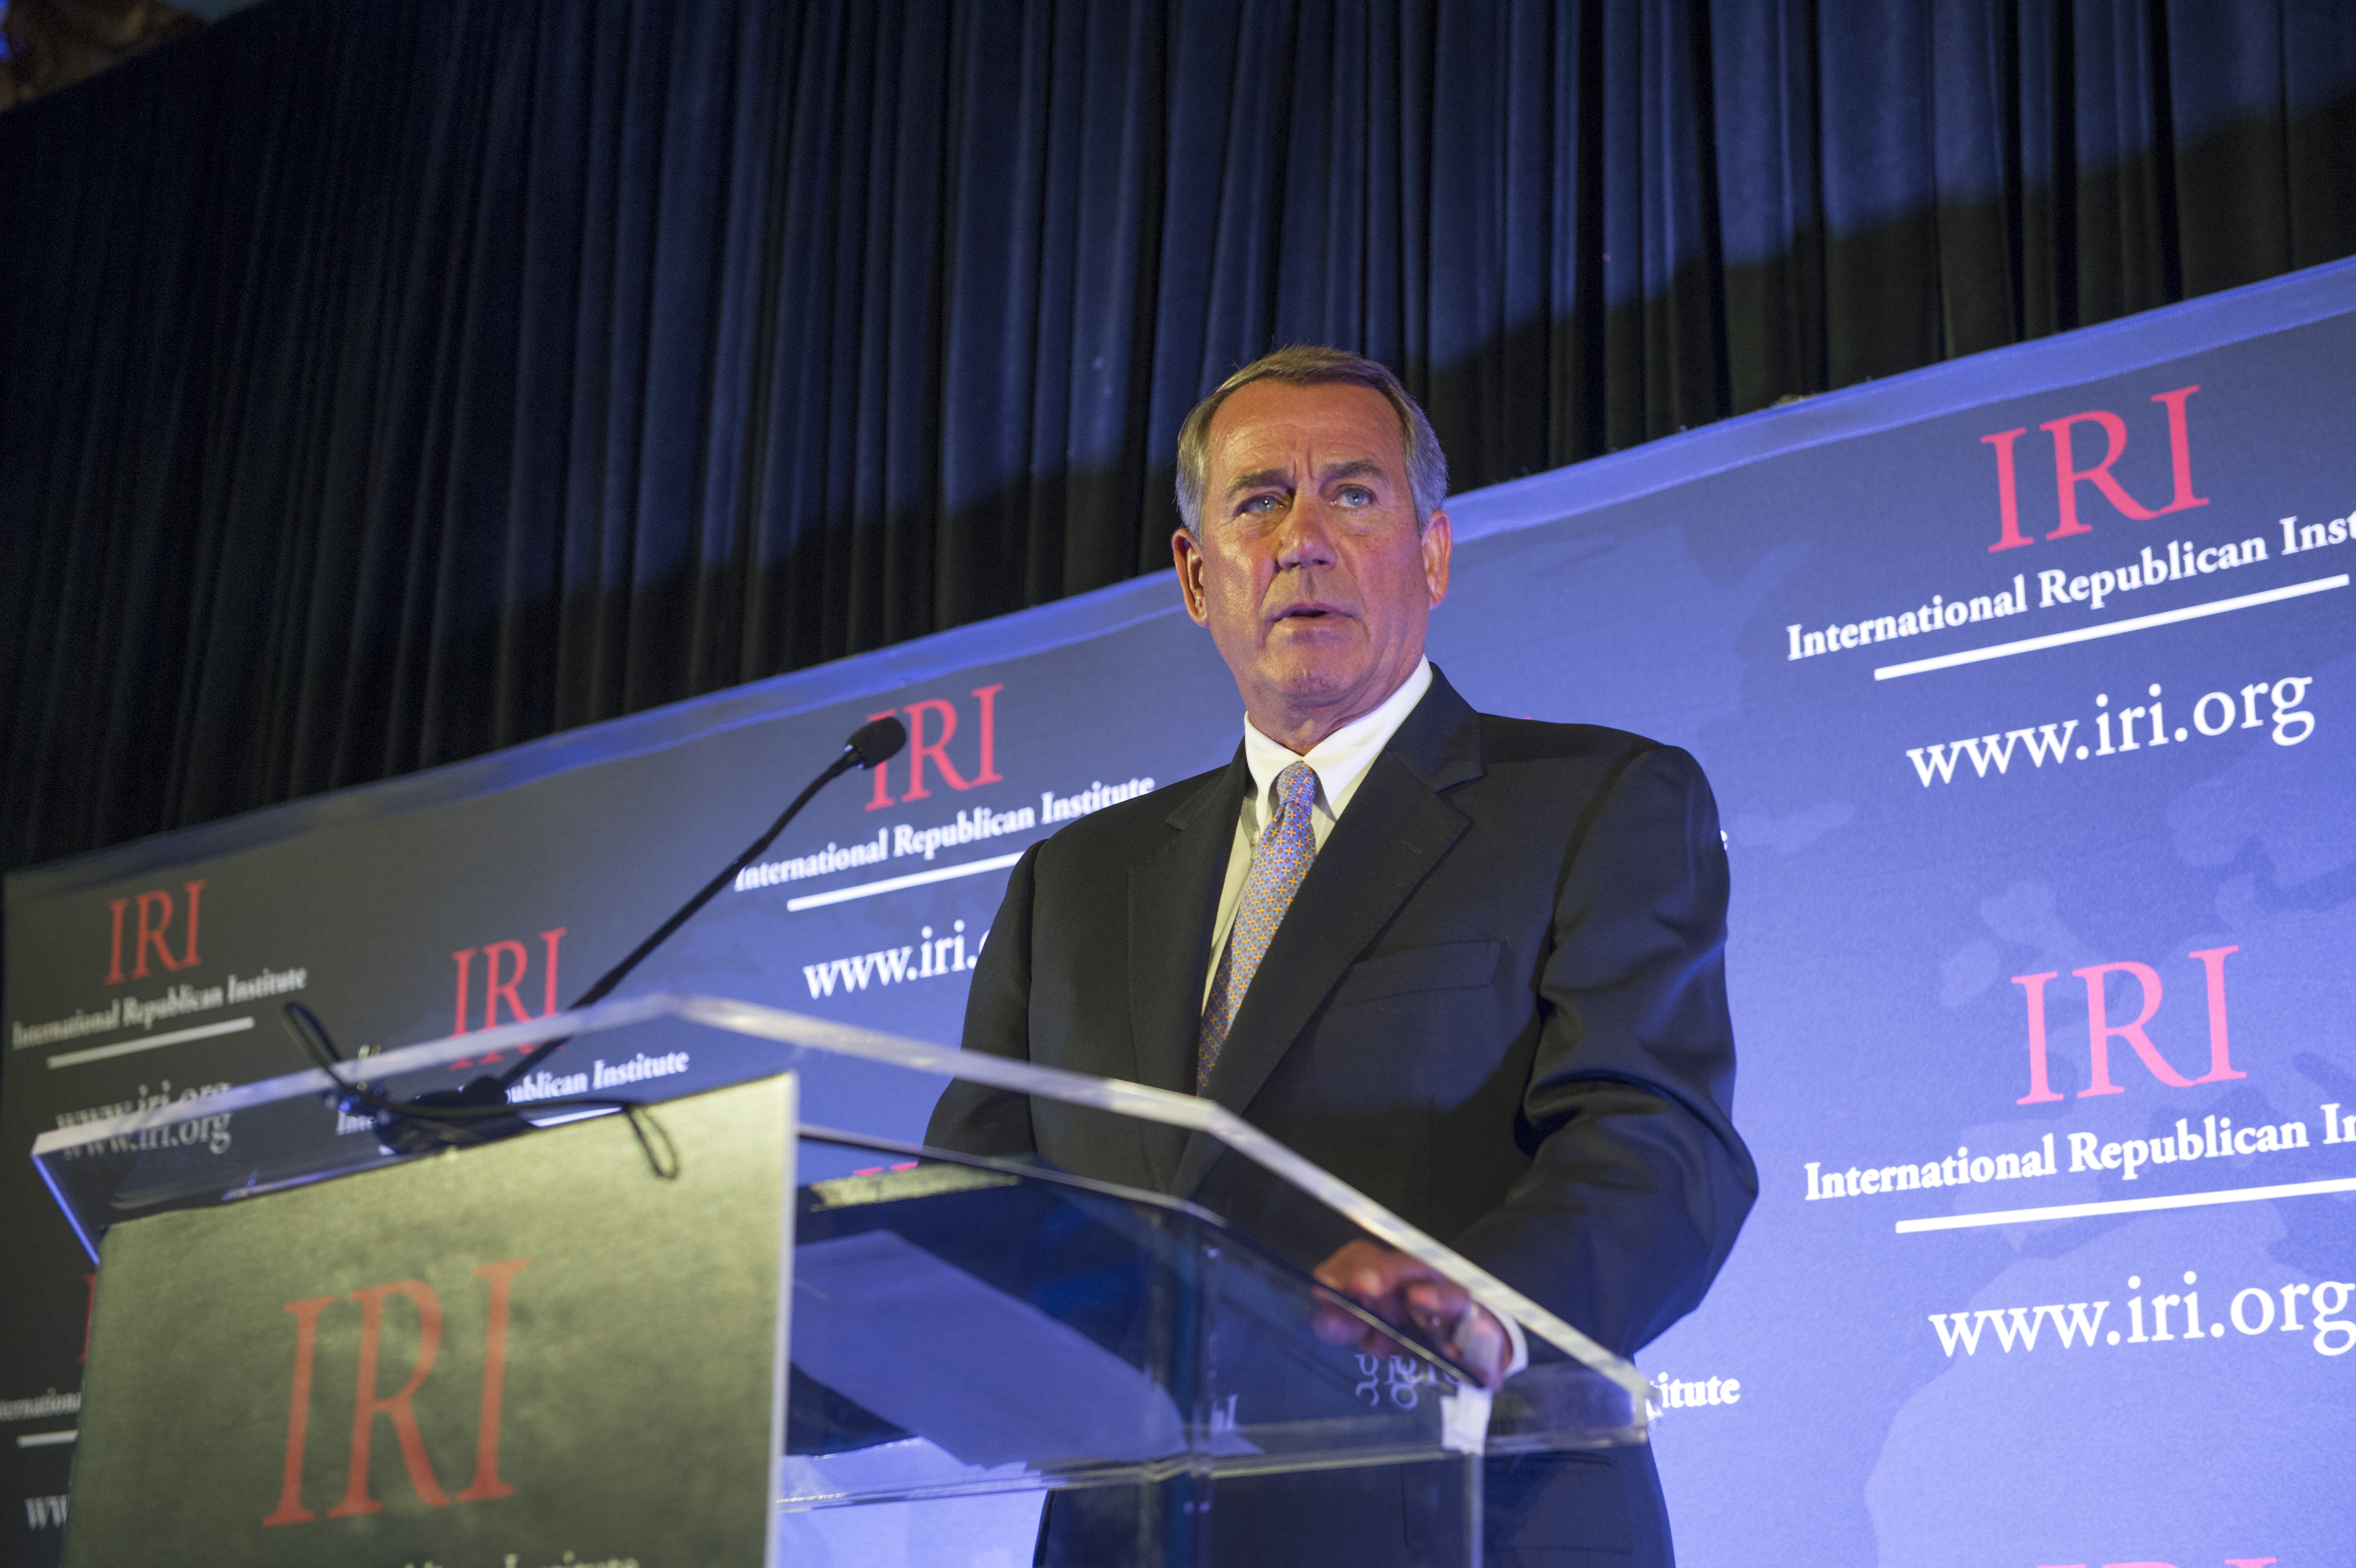 Speaker Boehner accepting IRI's Freedom Award.